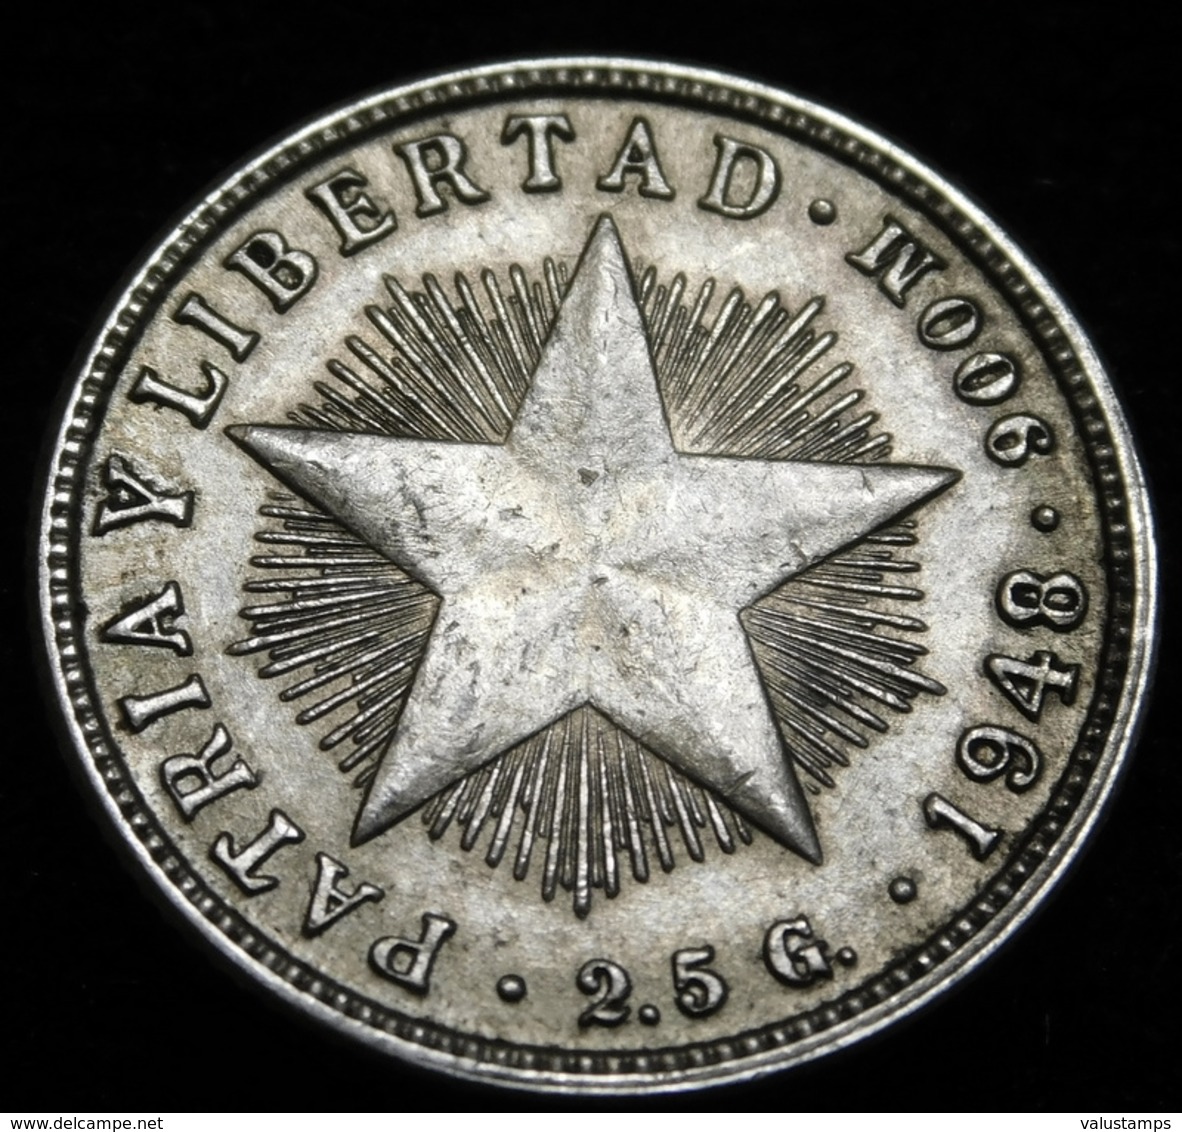 1948  Republica De Cuba Diez Centavos  Almost Uncirculated??  Silver Coin A46-850 - Cuba